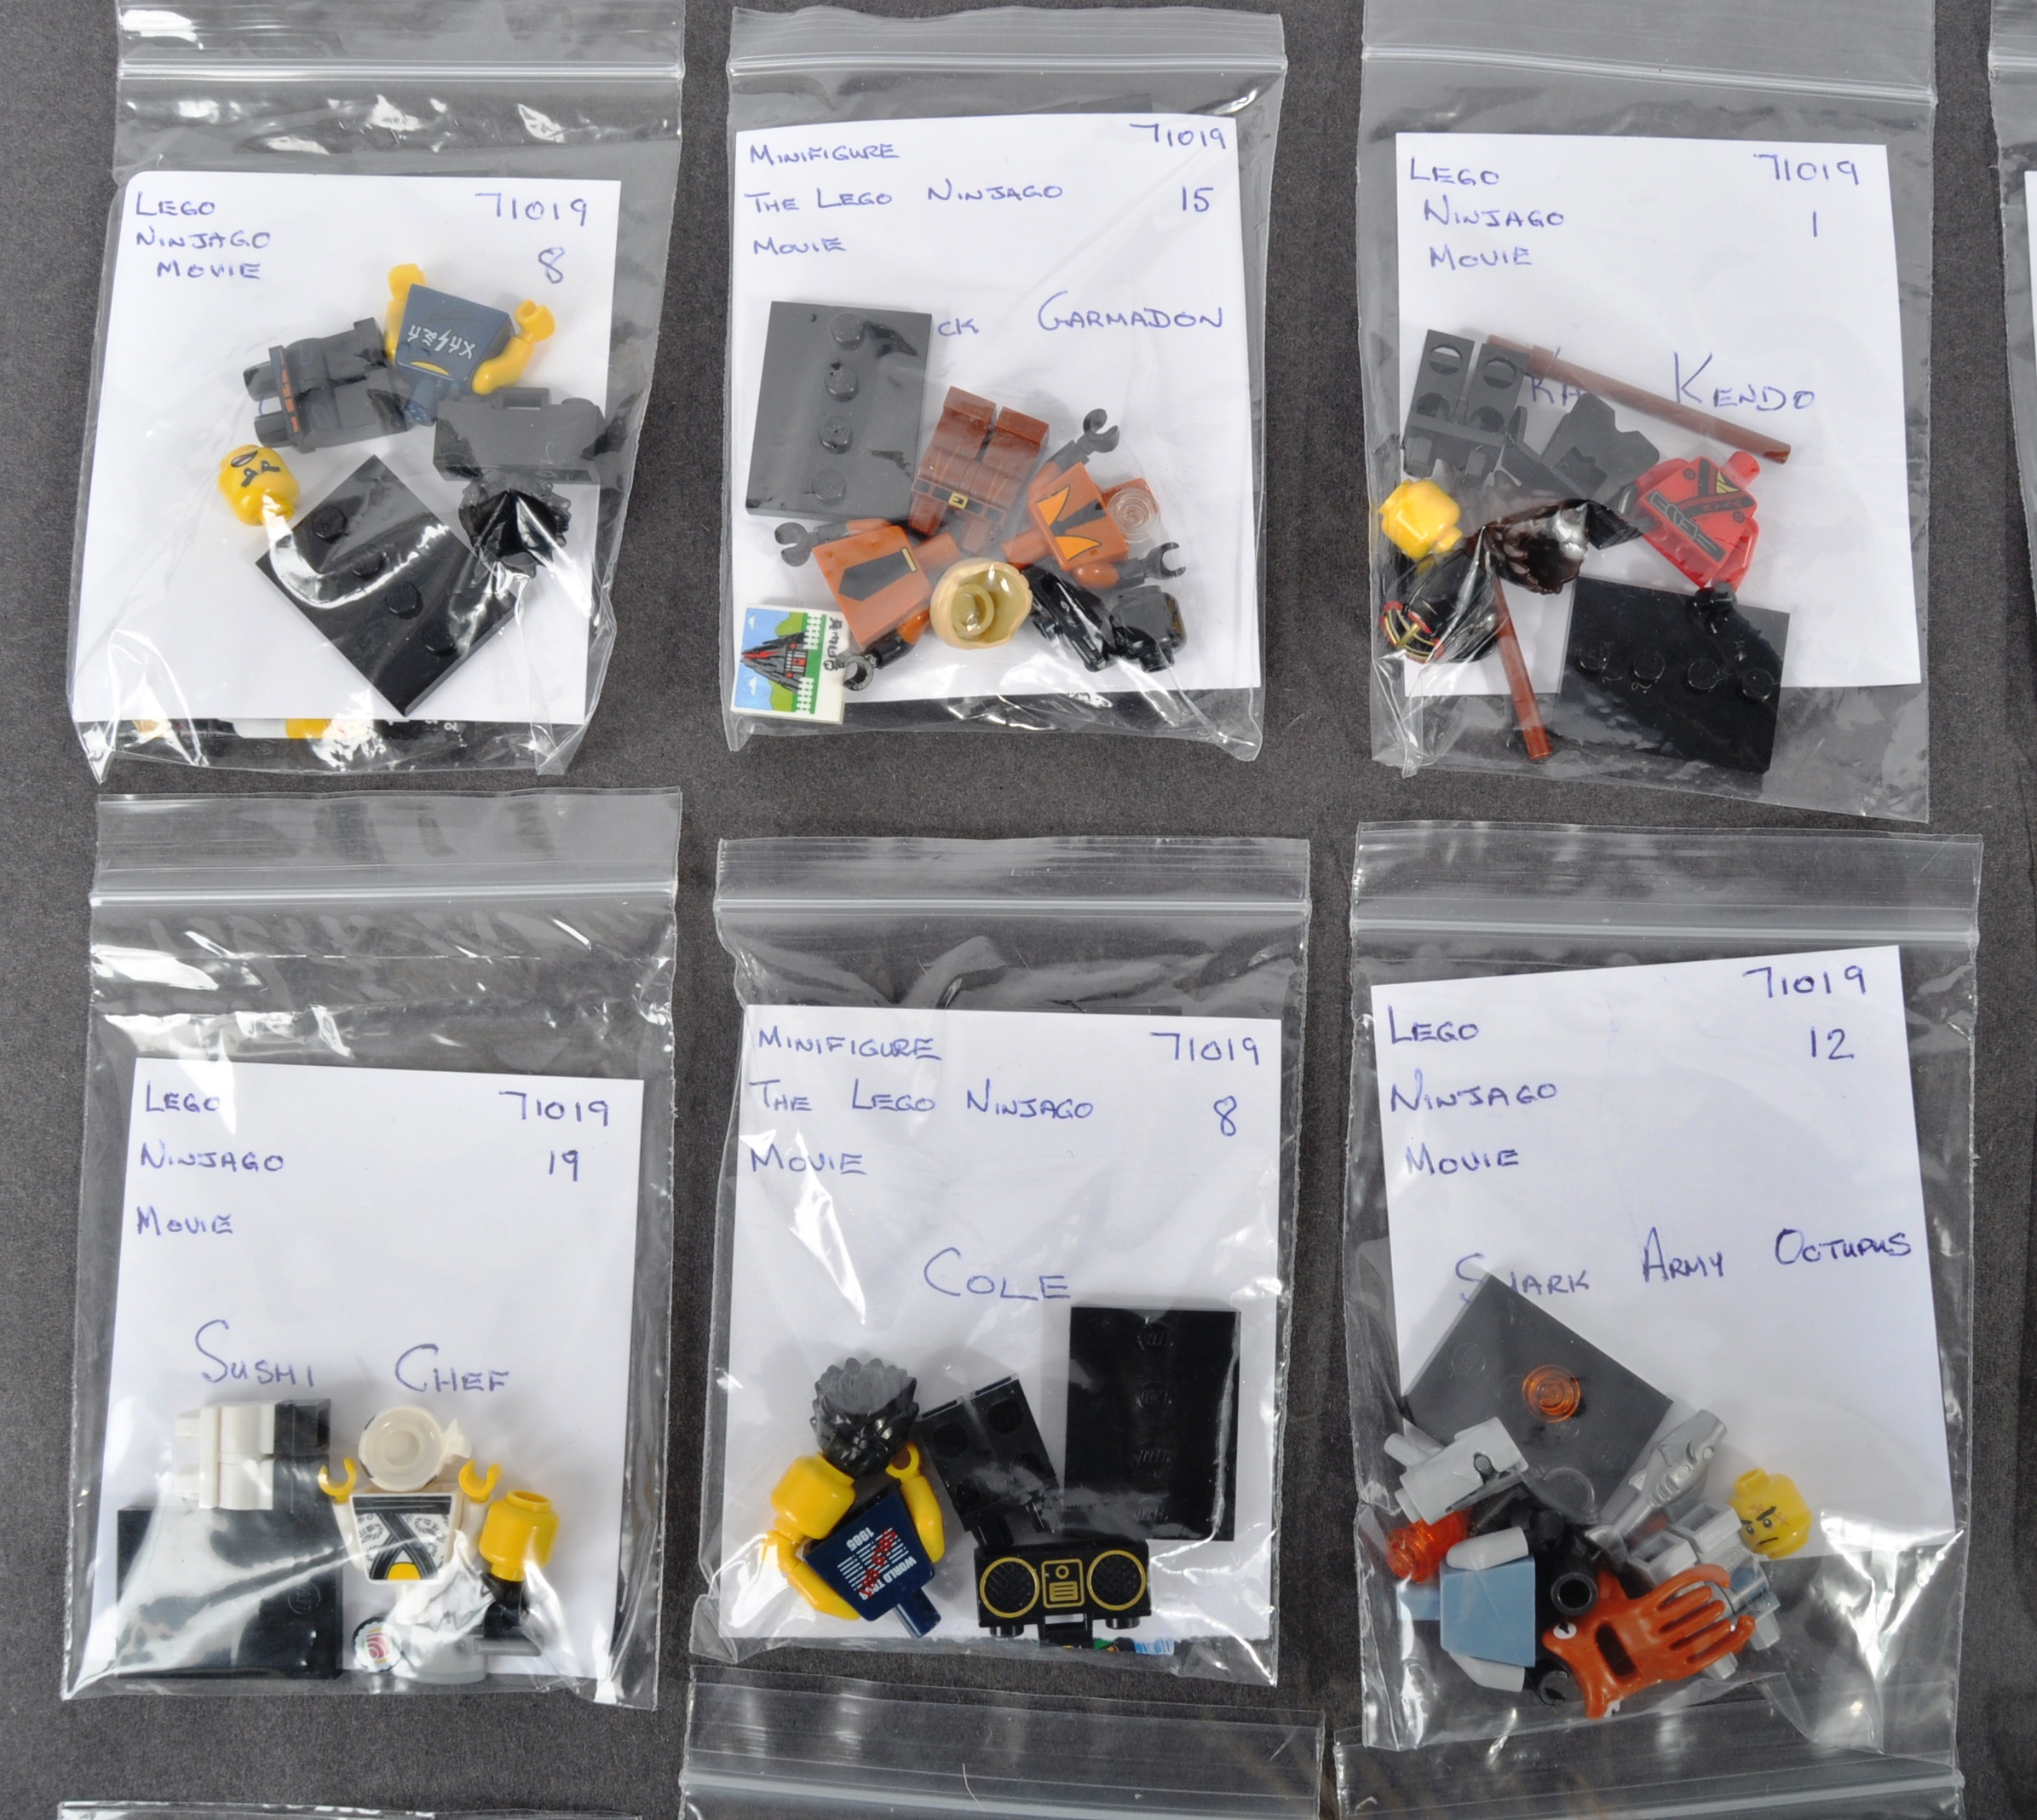 LEGO MINIFIGURES - 71019 - LEGO NINJAGO MOVIE - Image 2 of 5